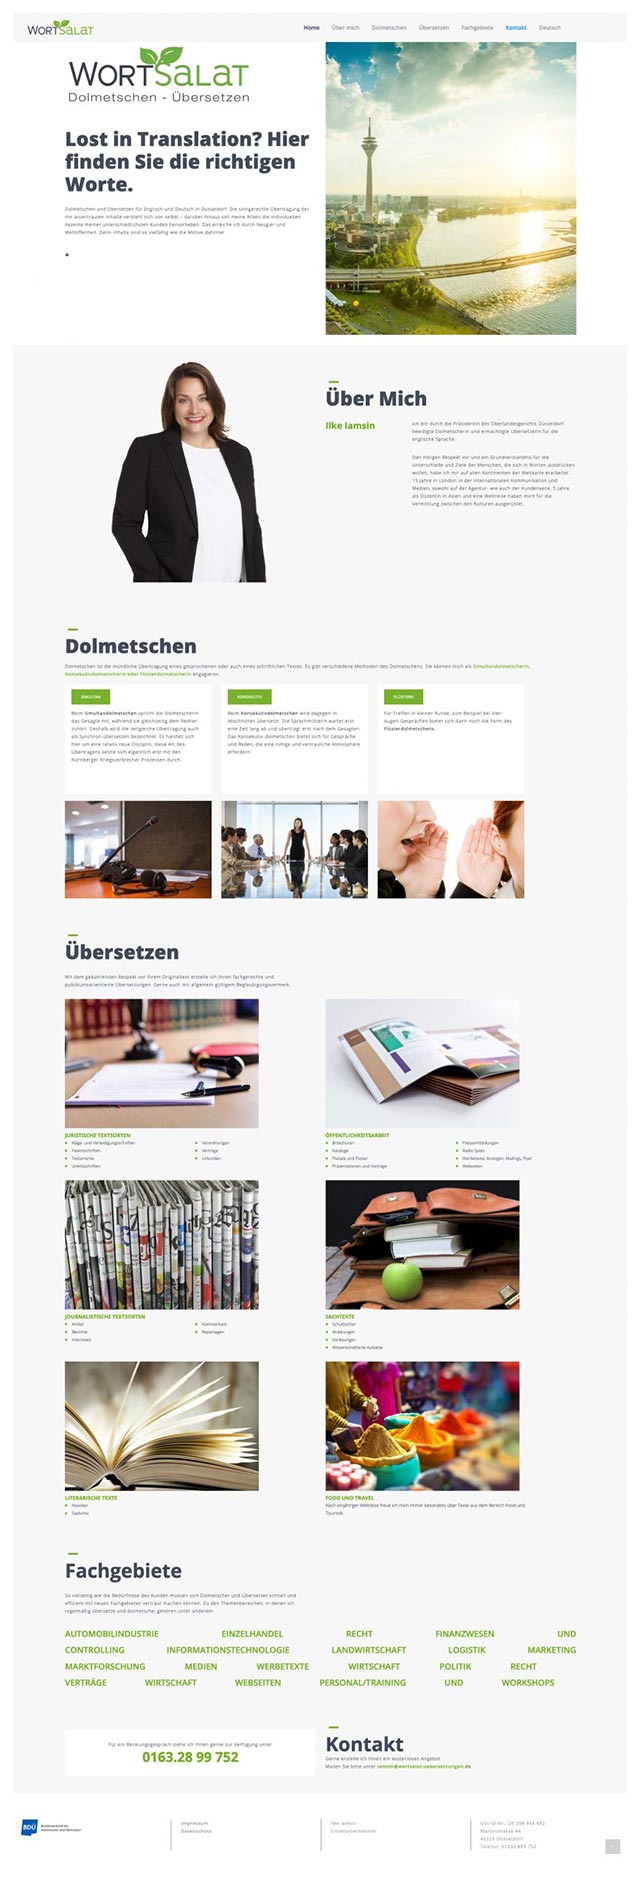 coolpack webdesign düsseldorf - Wortsalat